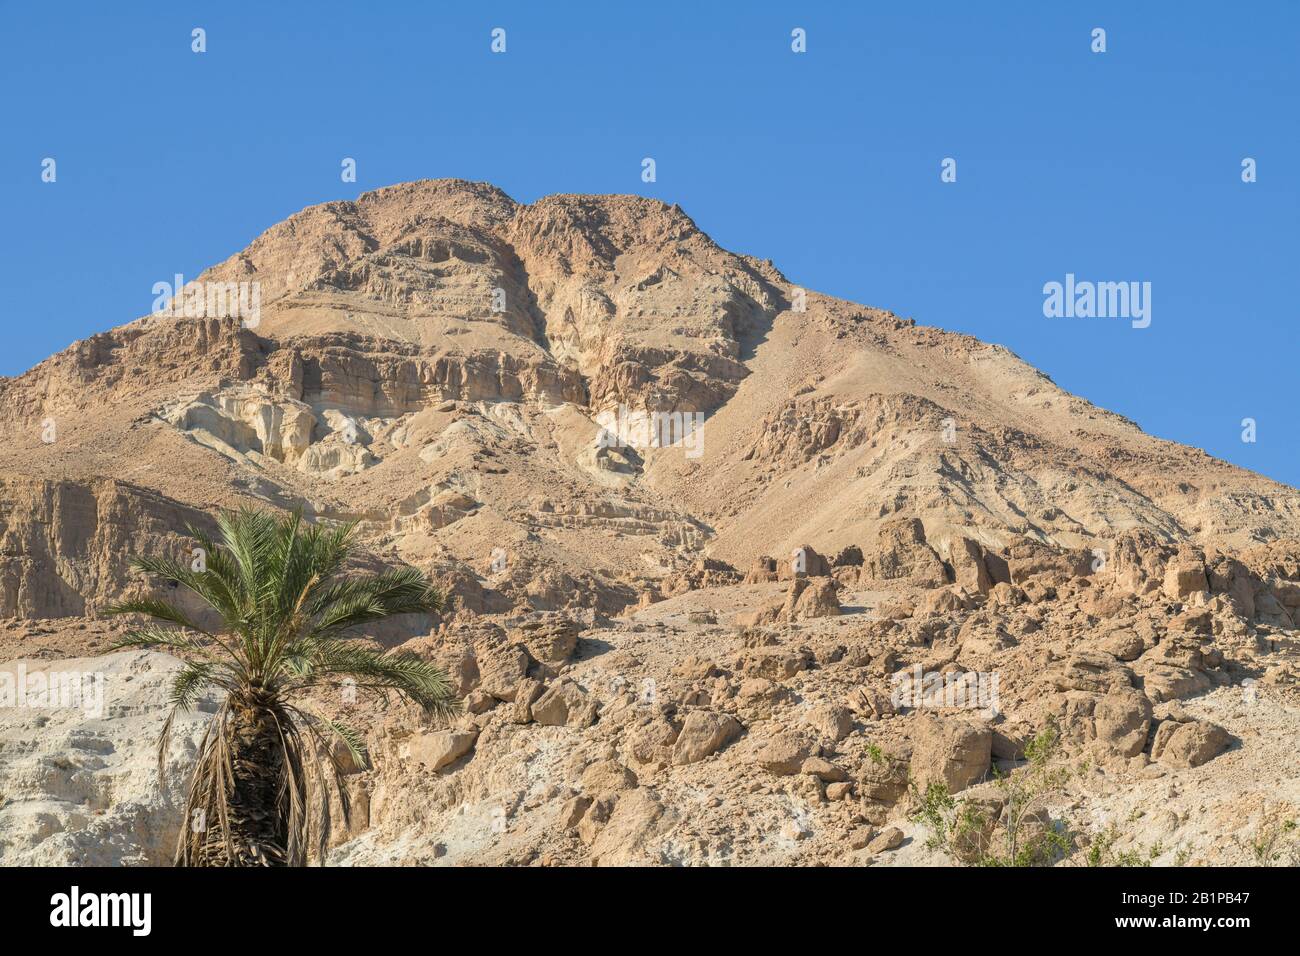 Felsformationen, Berge Im Wadi David, Naturreservat Ein Gedi, Israel Foto de stock